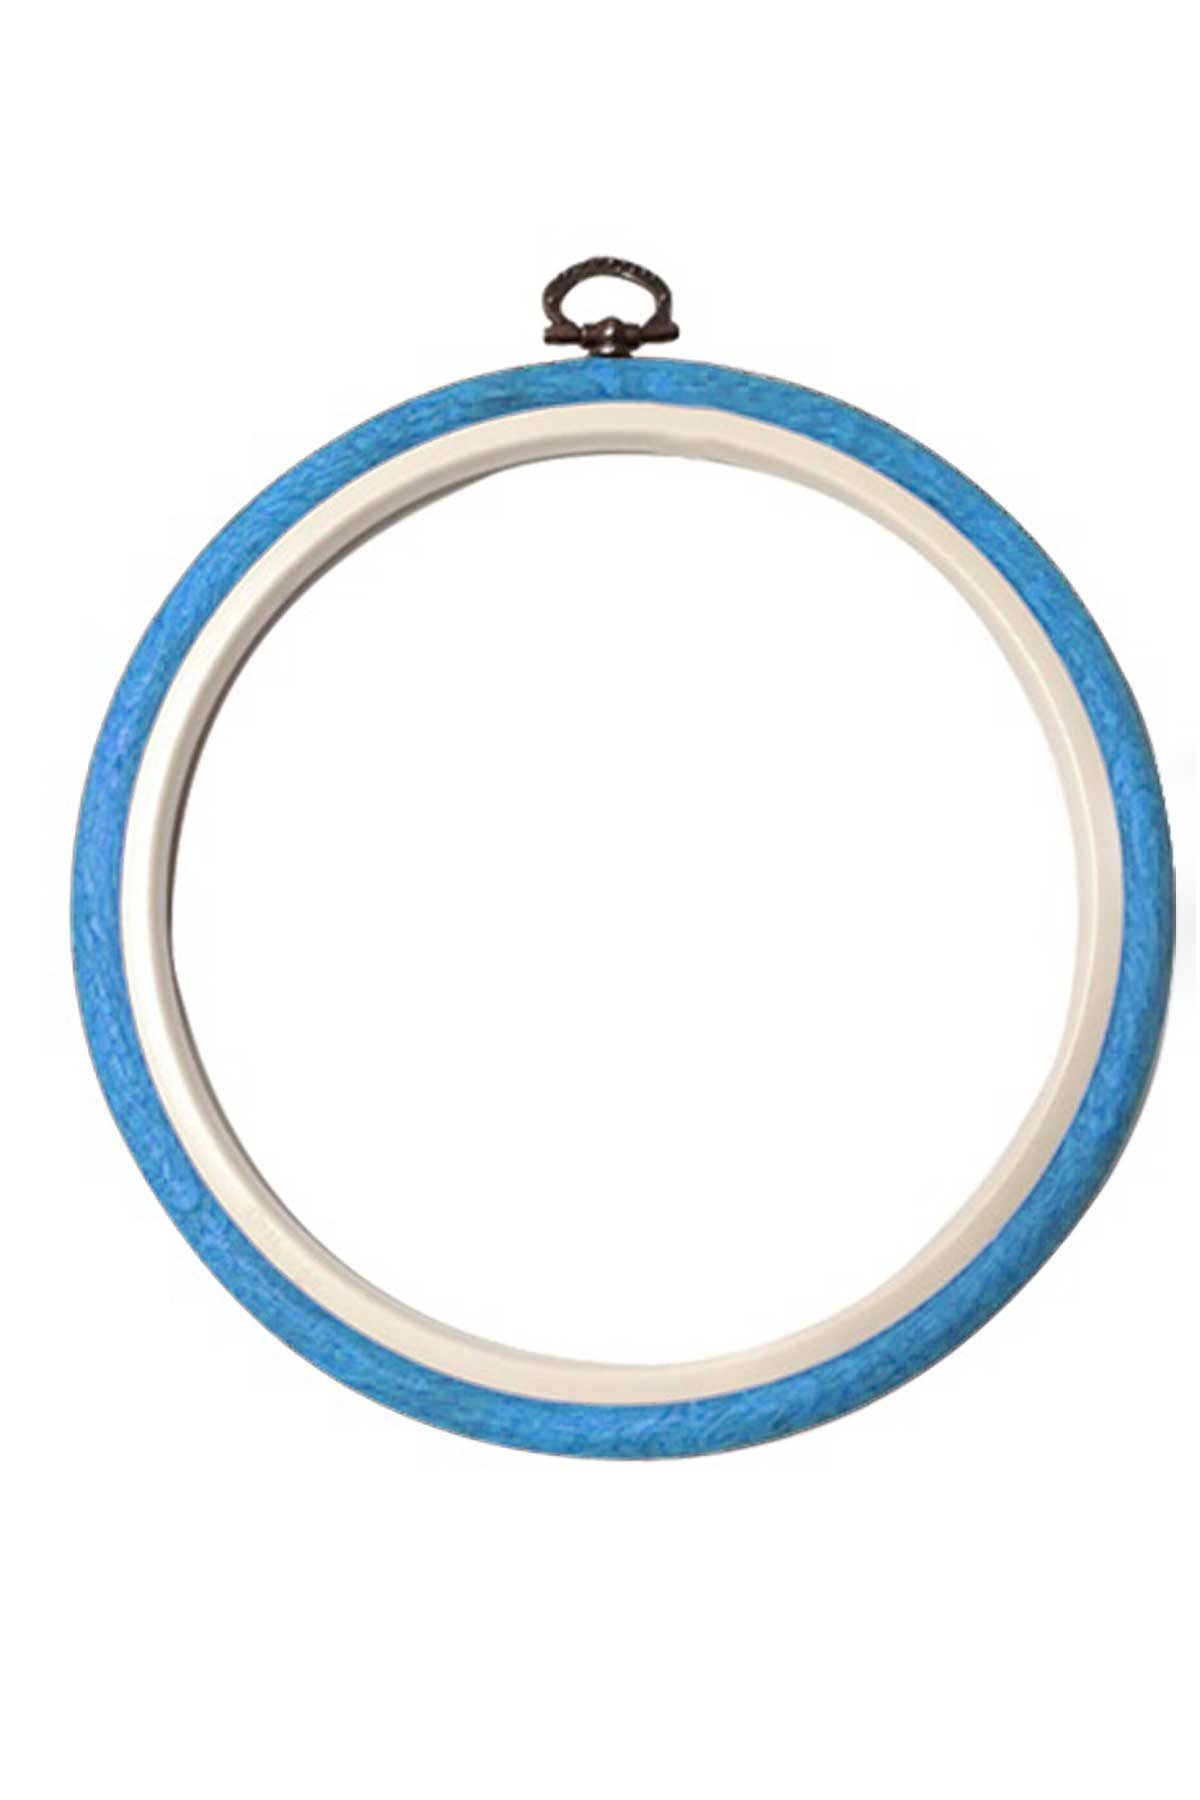 Nurge Plastic Round Embroidery Hoop